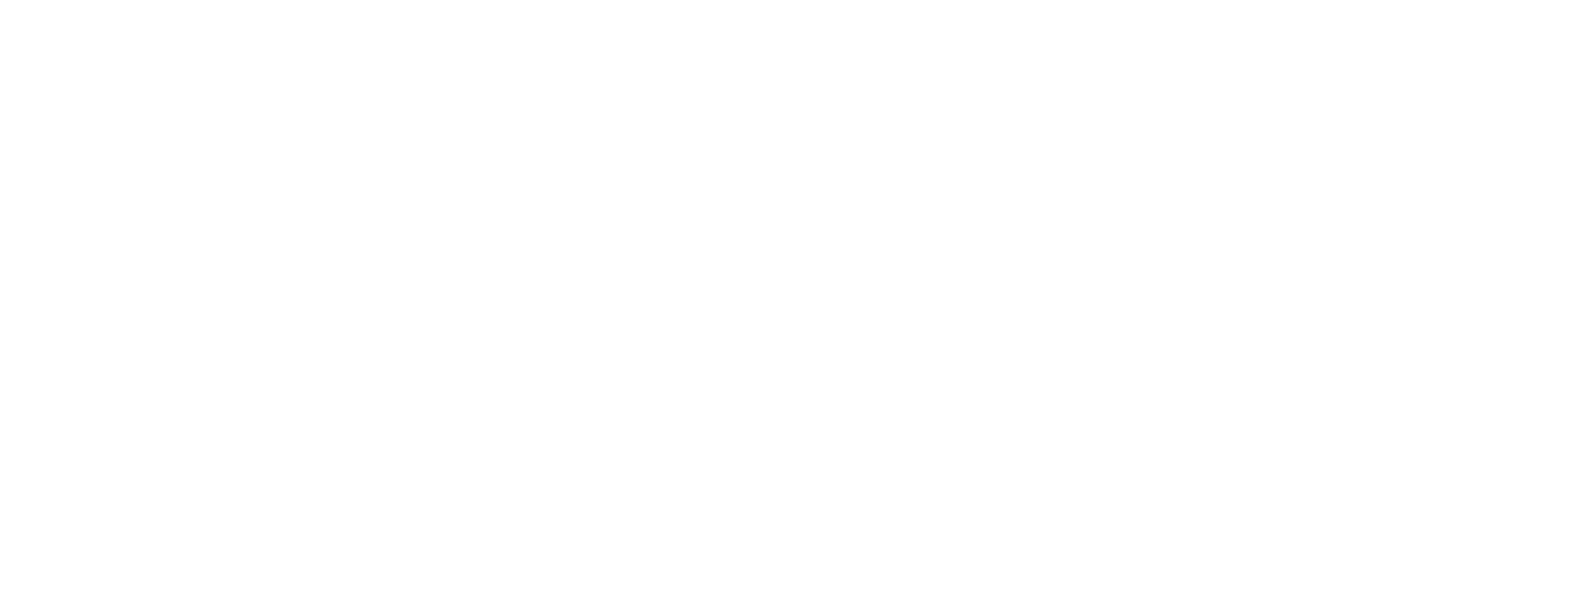 Bumrungrad Hospital Logo groß für dunkle Hintergründe (transparentes PNG)